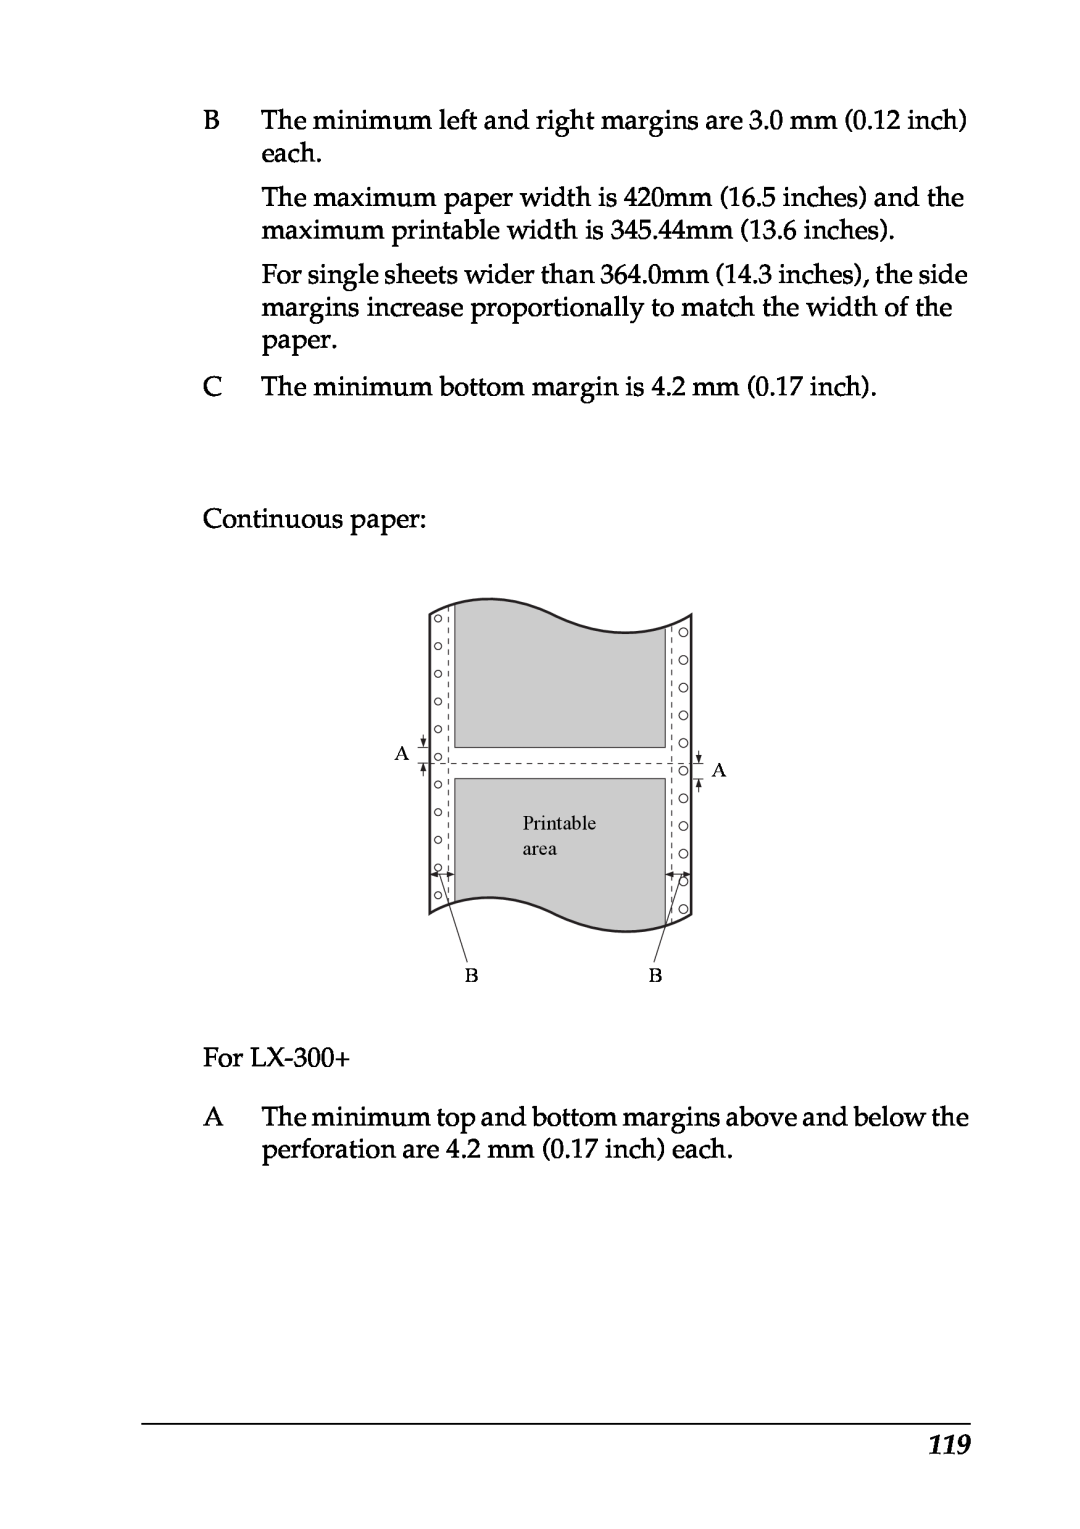 Epson LX-1170 manual A A Printable area BB 